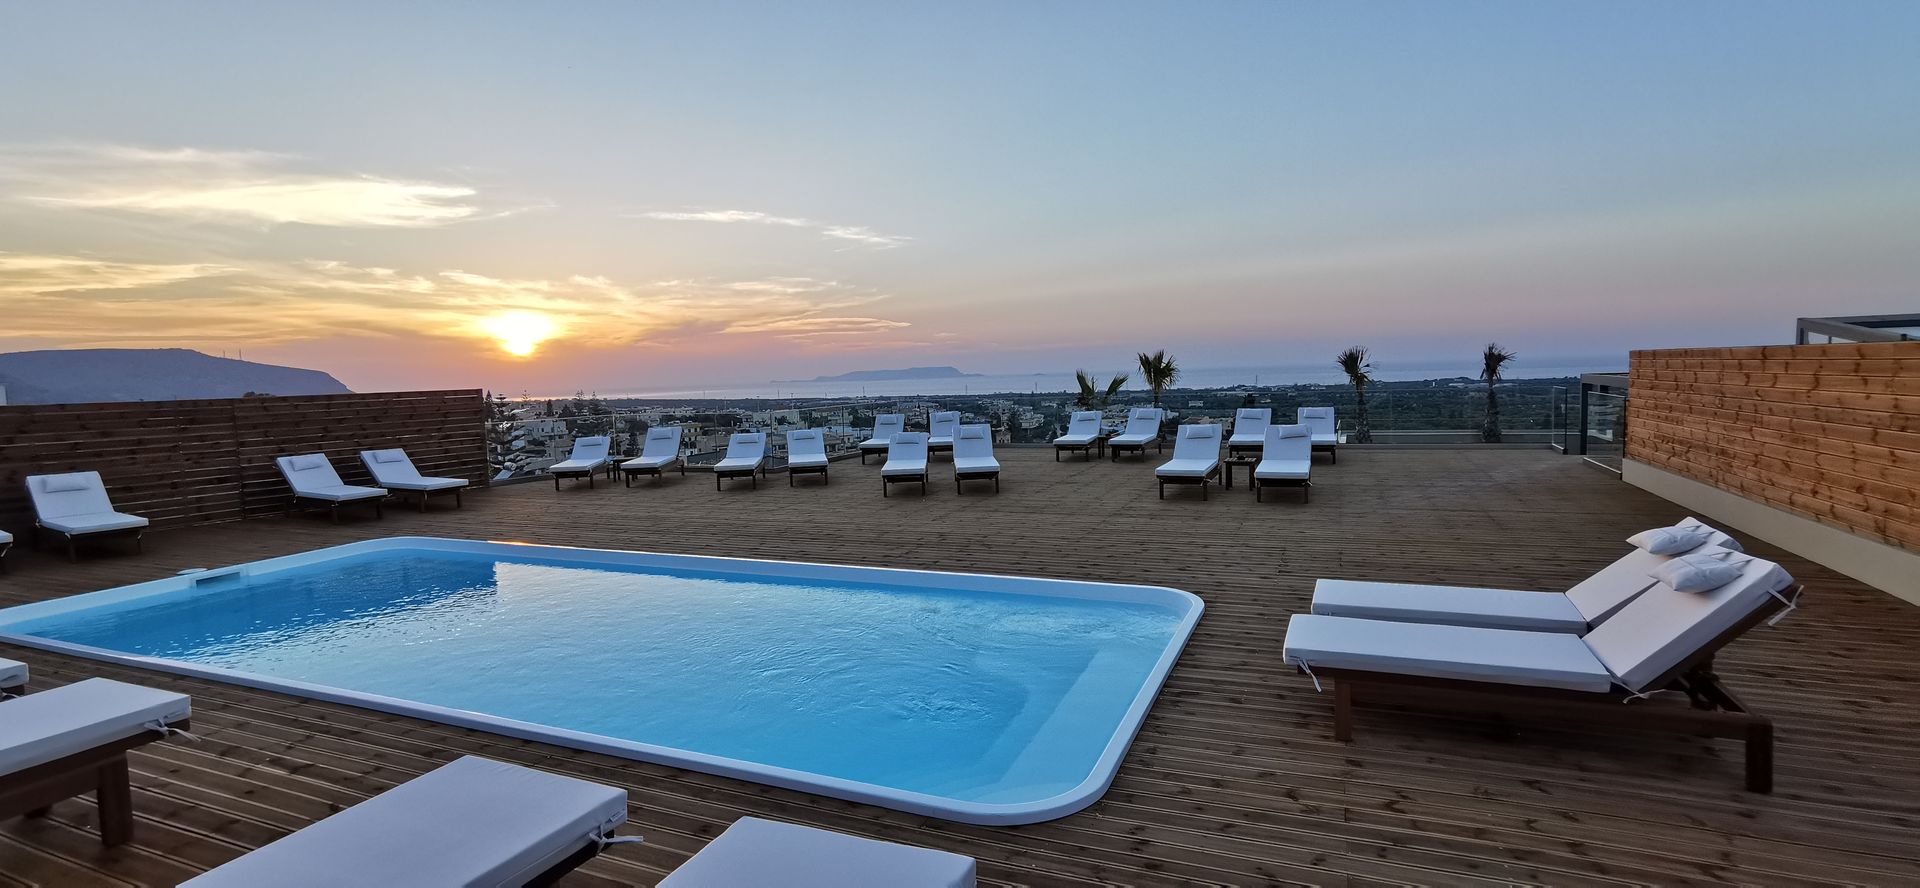 4* Villaggio Hotel - Χερσόνησος, Κρήτη ✦ 2 Ημέρες (1